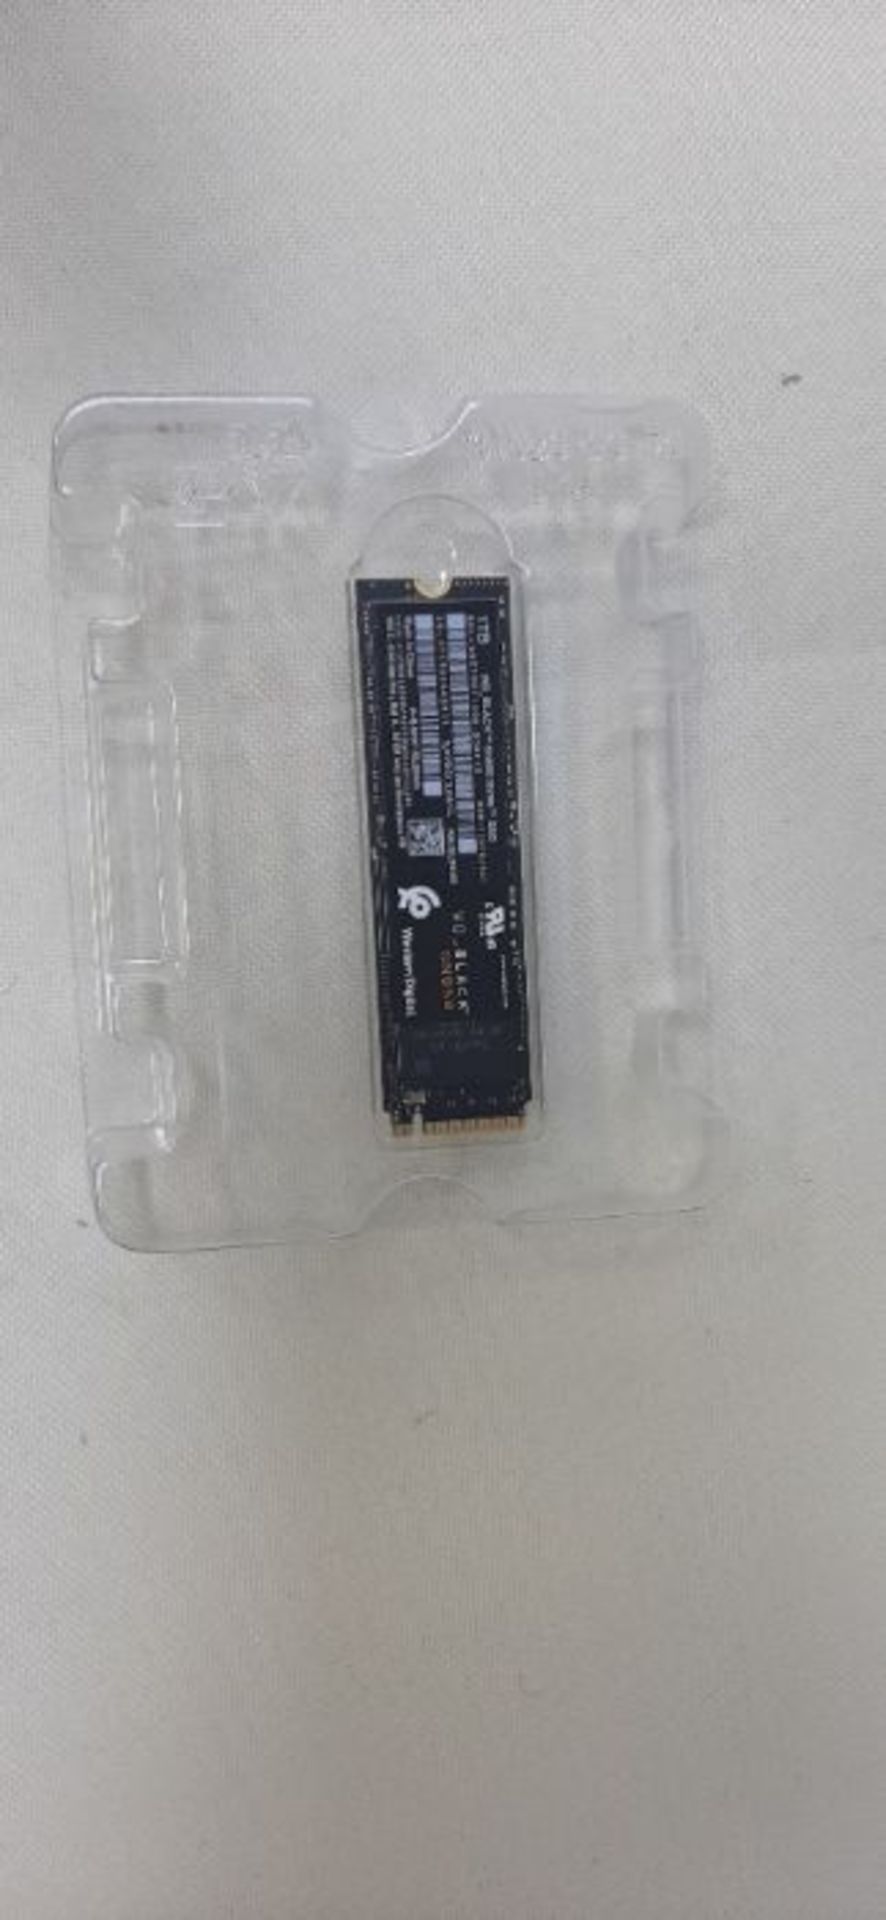 RRP £168.00 W�D�_�B�L�A�C�K� �S�N�8�5�0� �1�T�B� �N�V�M�e� �I�n�t�e�r�n�a�l� �G�a�m�i�n�g� �S�S�D�;� - Image 3 of 3